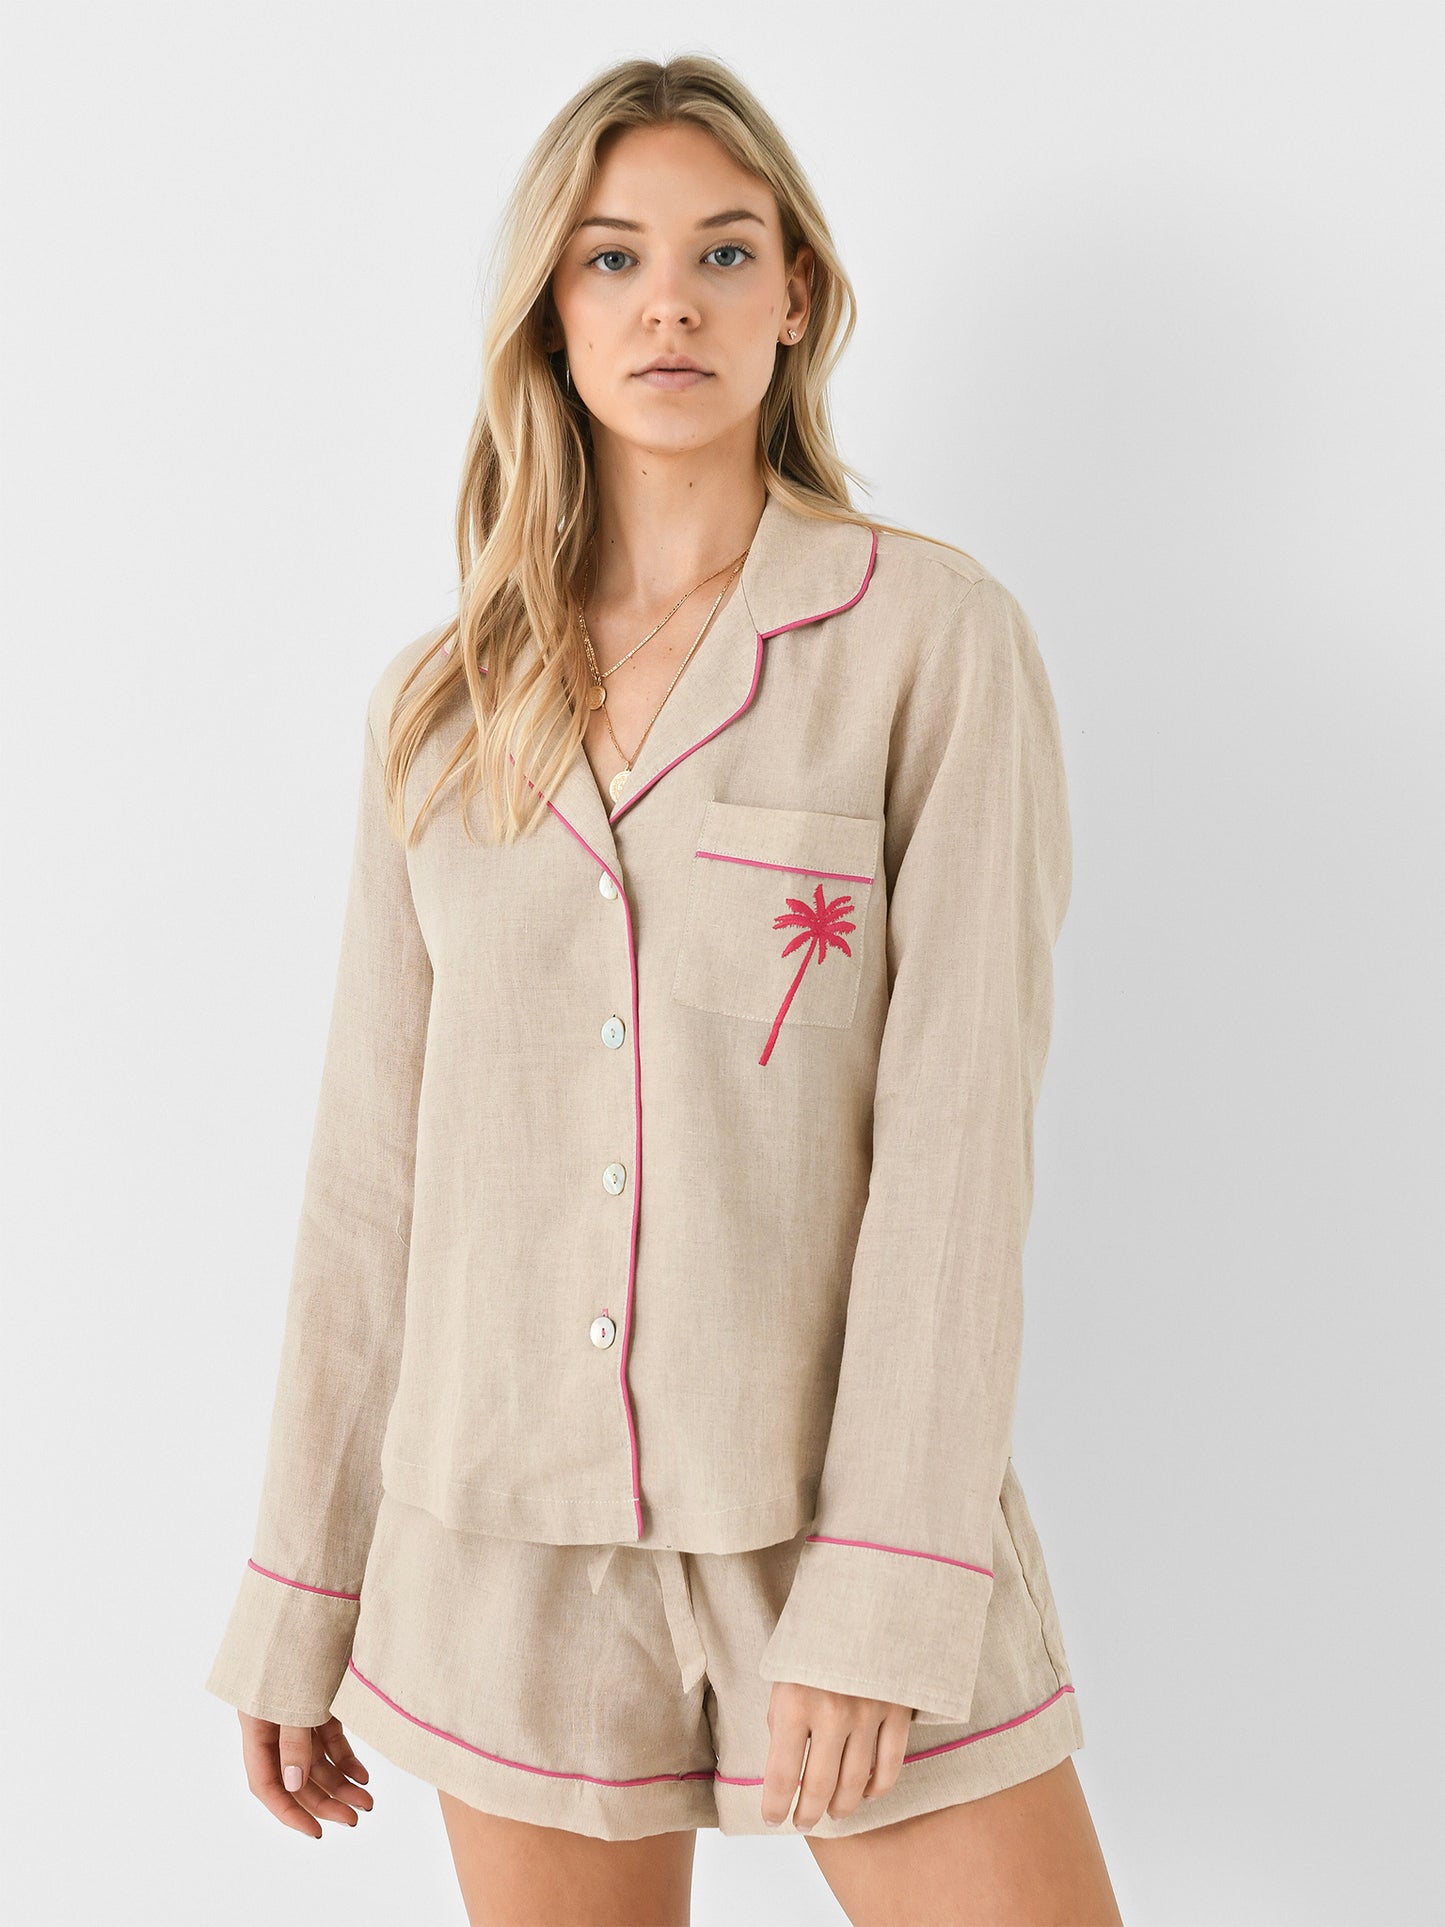 The Lazy Poet Women's Vera Linen Essentials Pajama Set